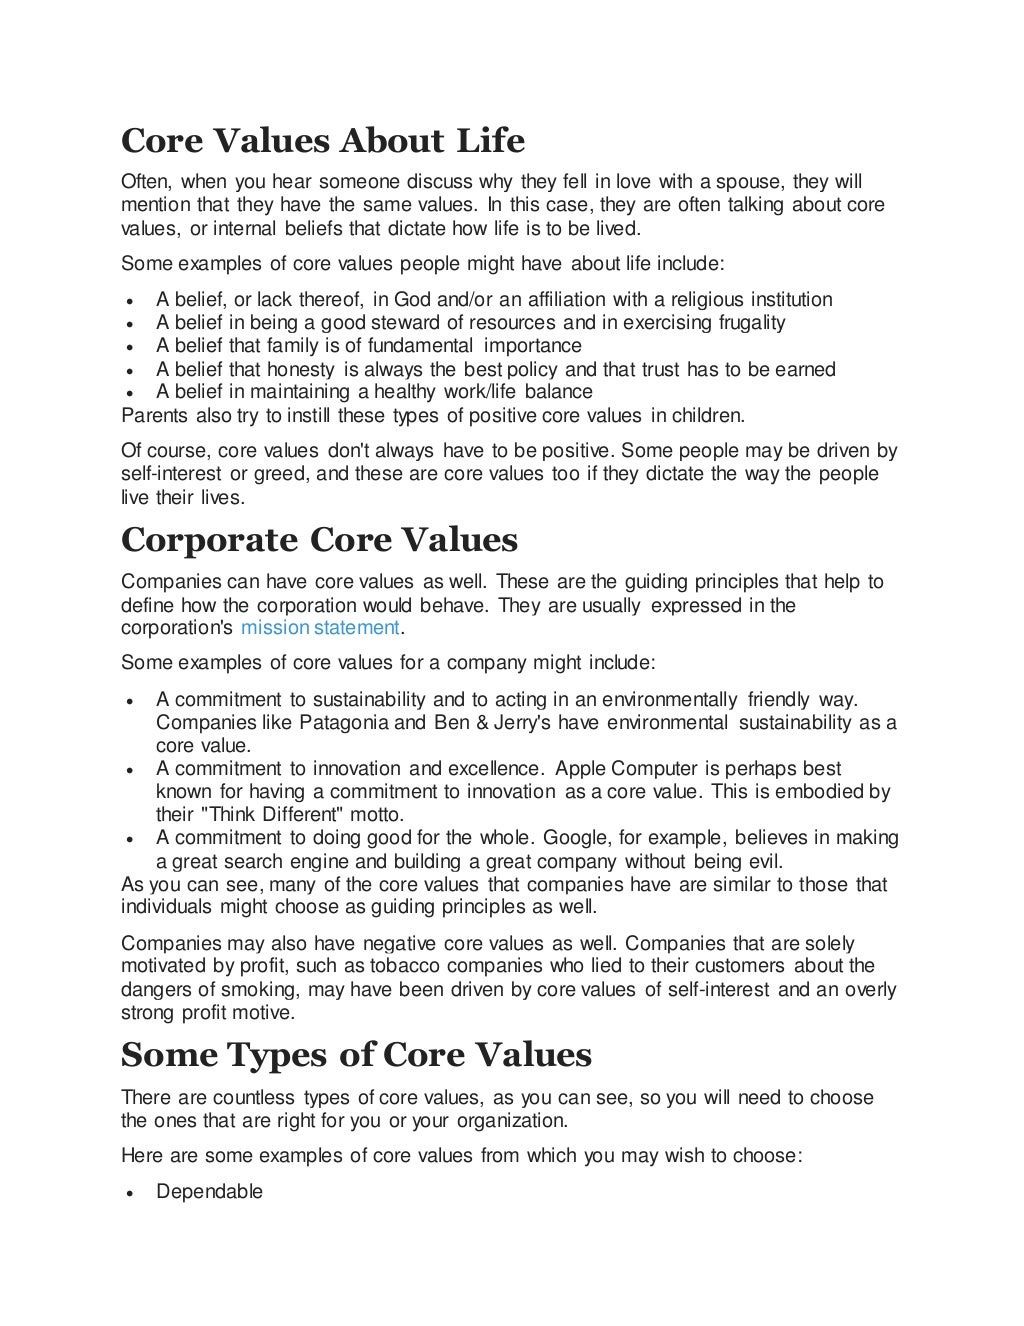 essay about core values